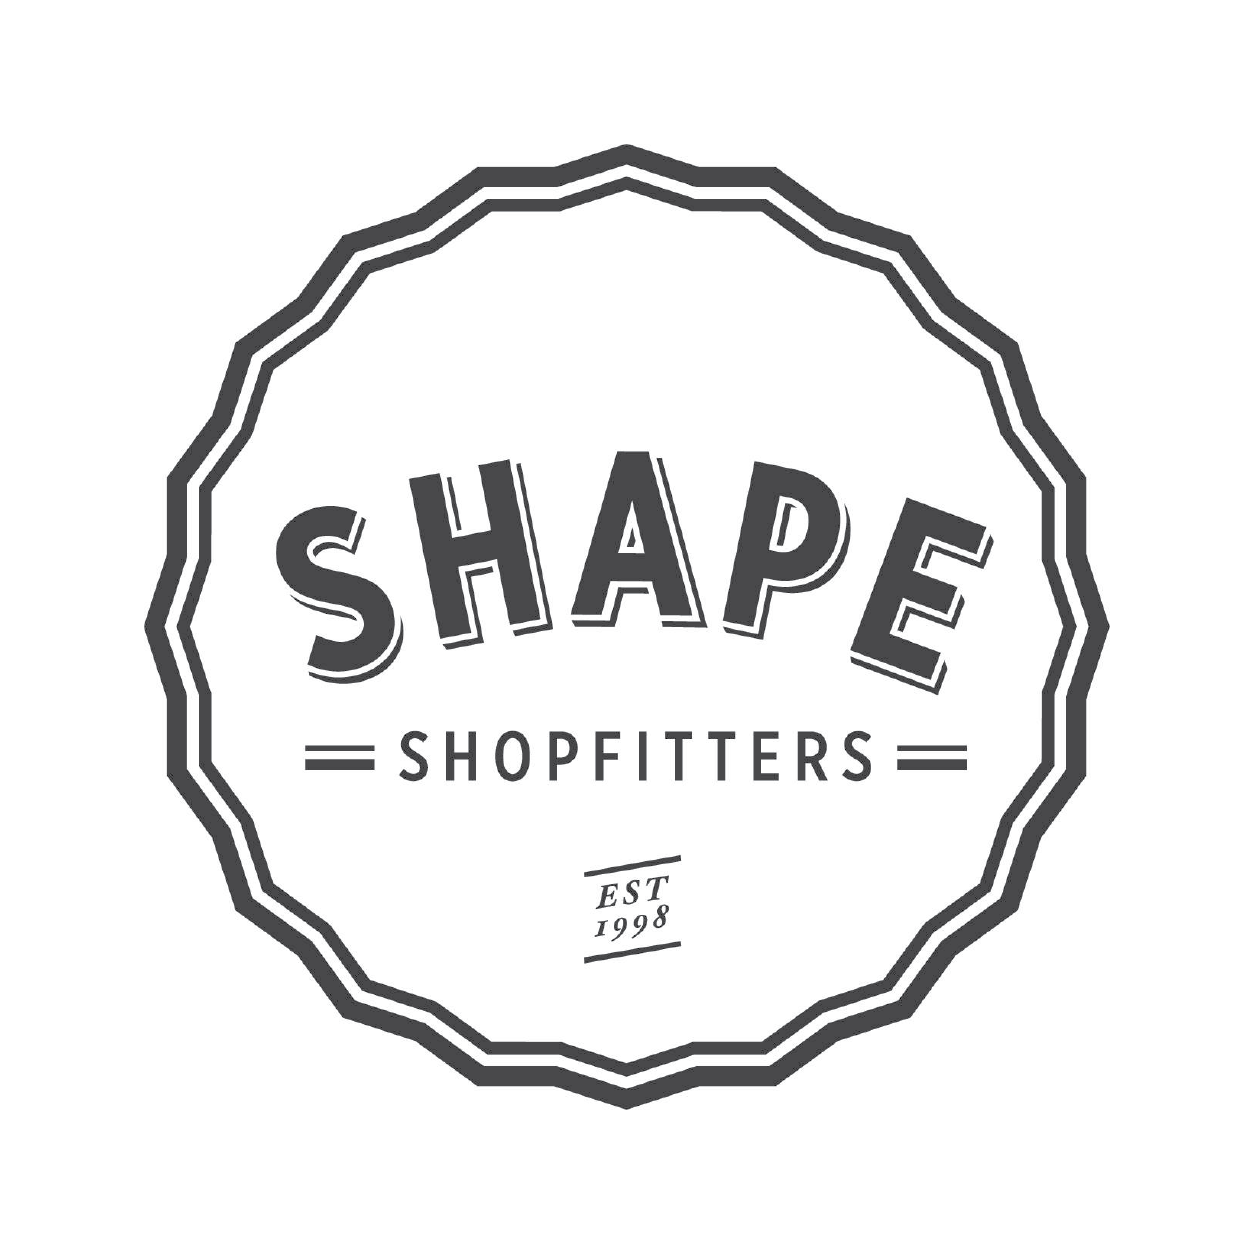 Shape Shopfitters